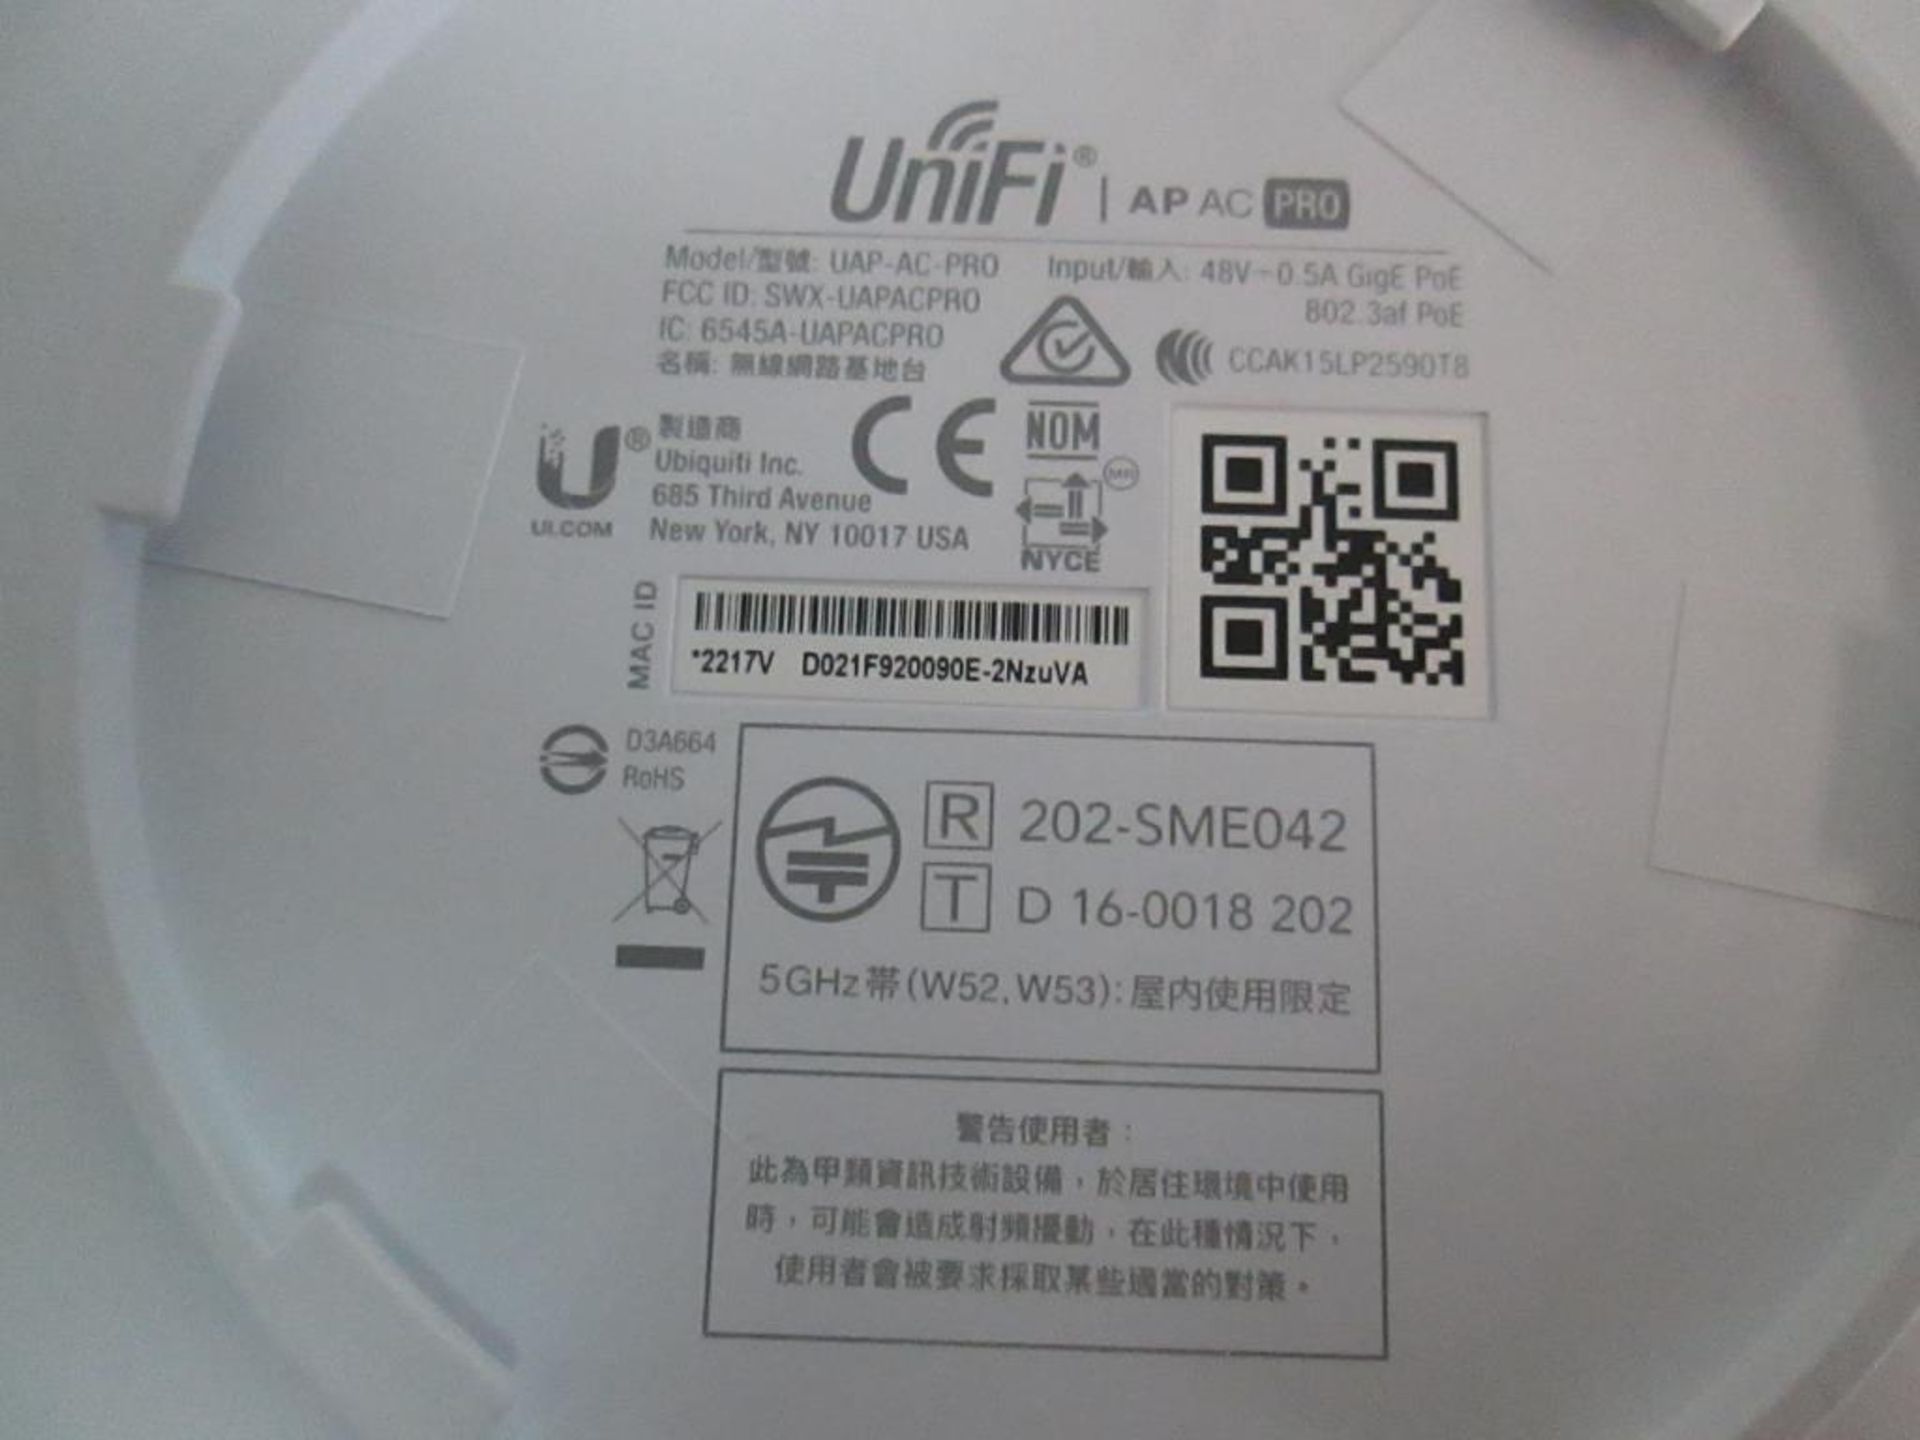 UniFi Wi-Fi Equipment - Image 2 of 4